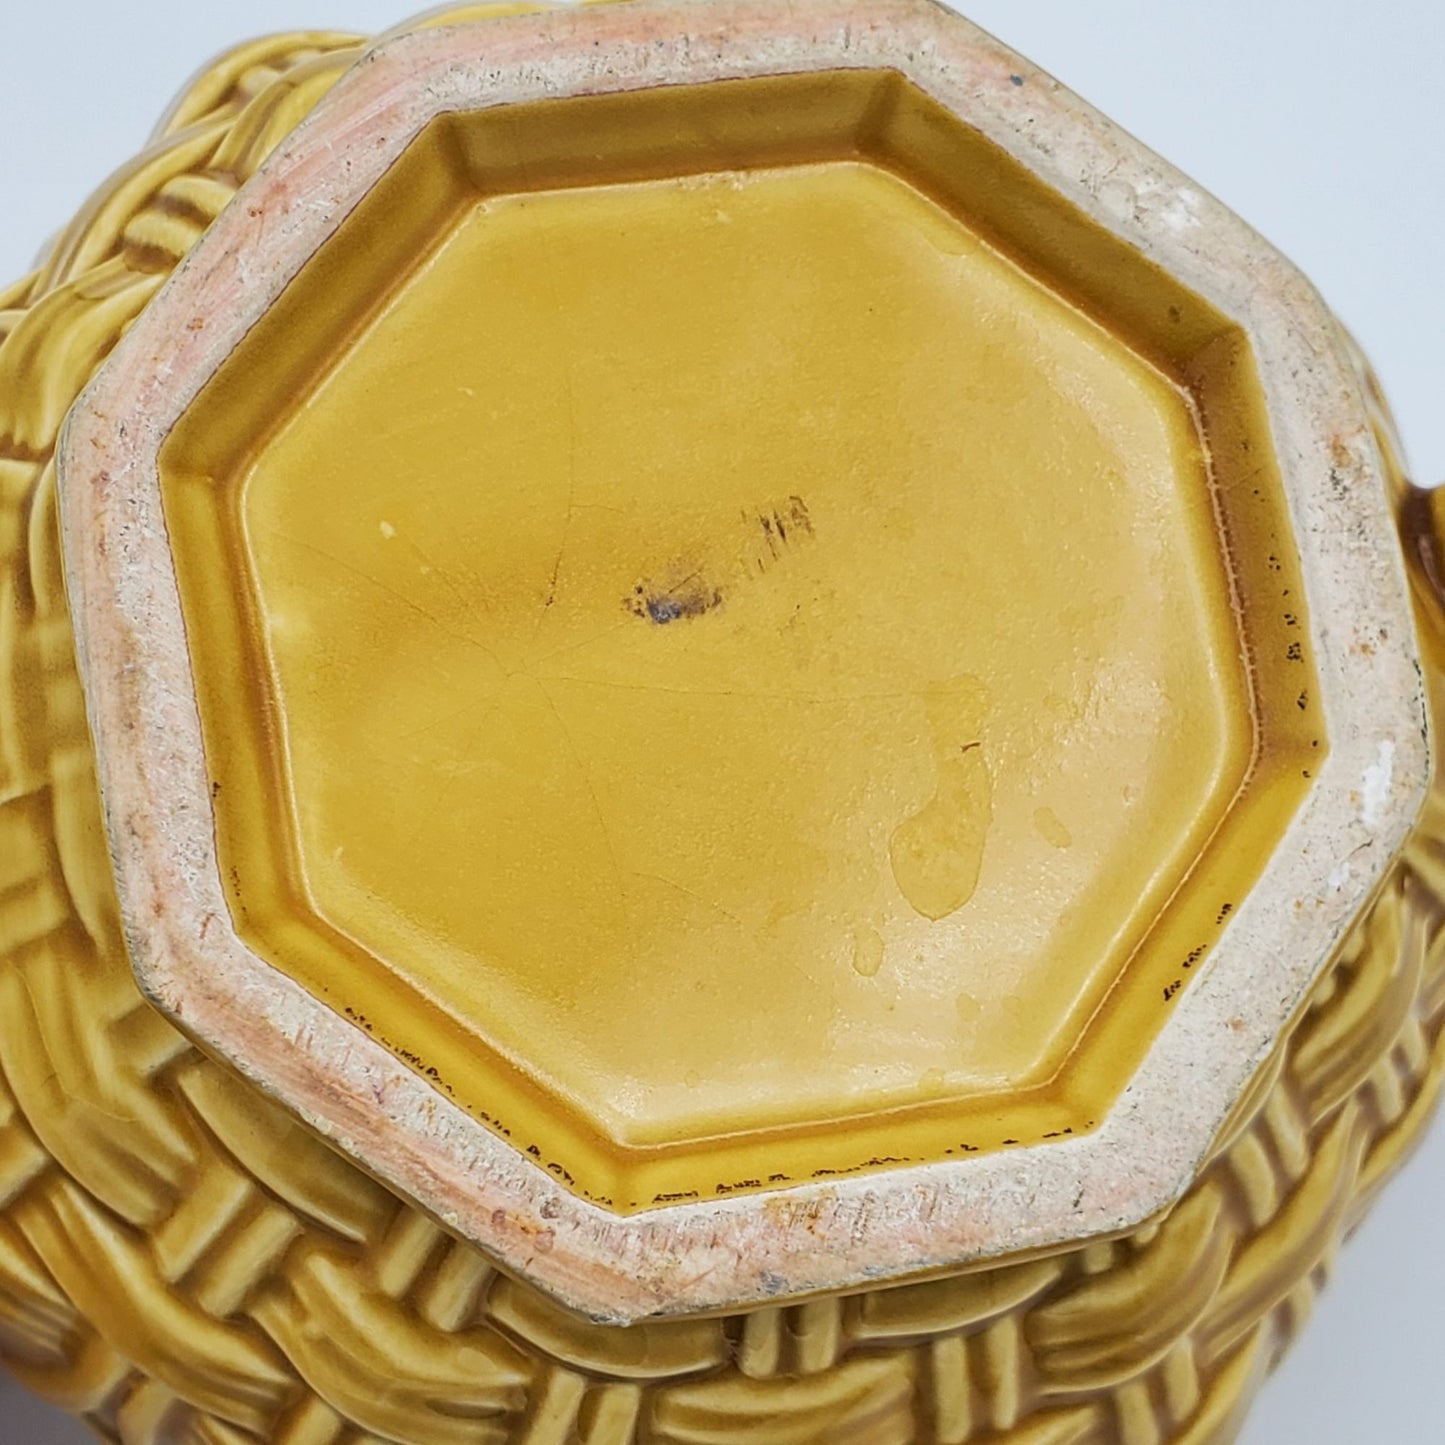 Mustard Yellow Basket Woven Glazed Decorative Tea Pot Cottagecore